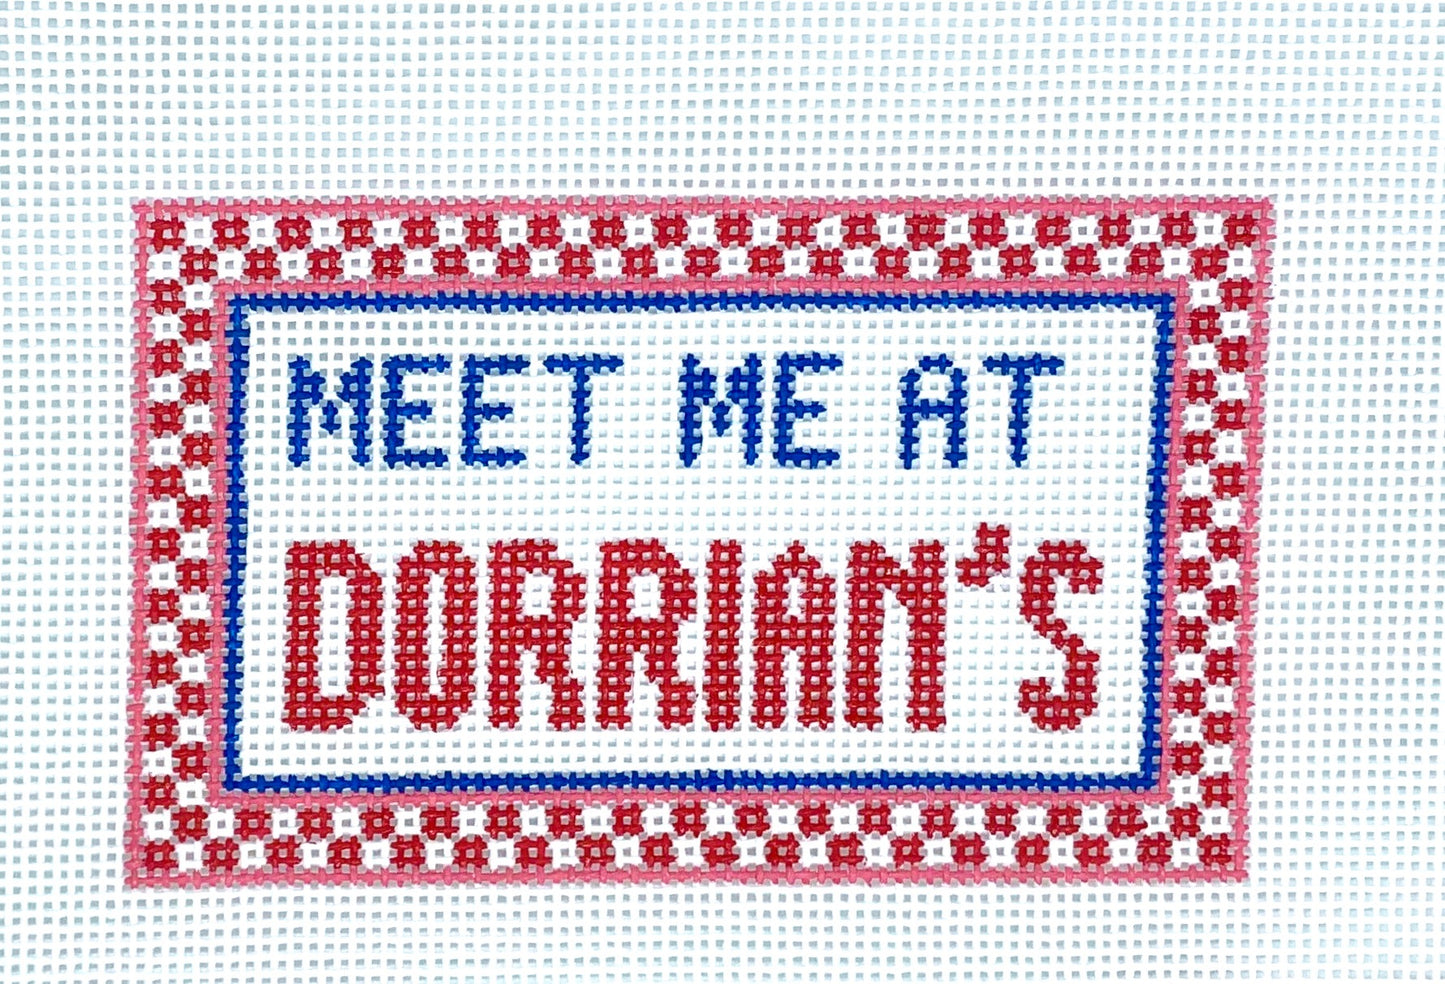 Meet Me At Dorrian's